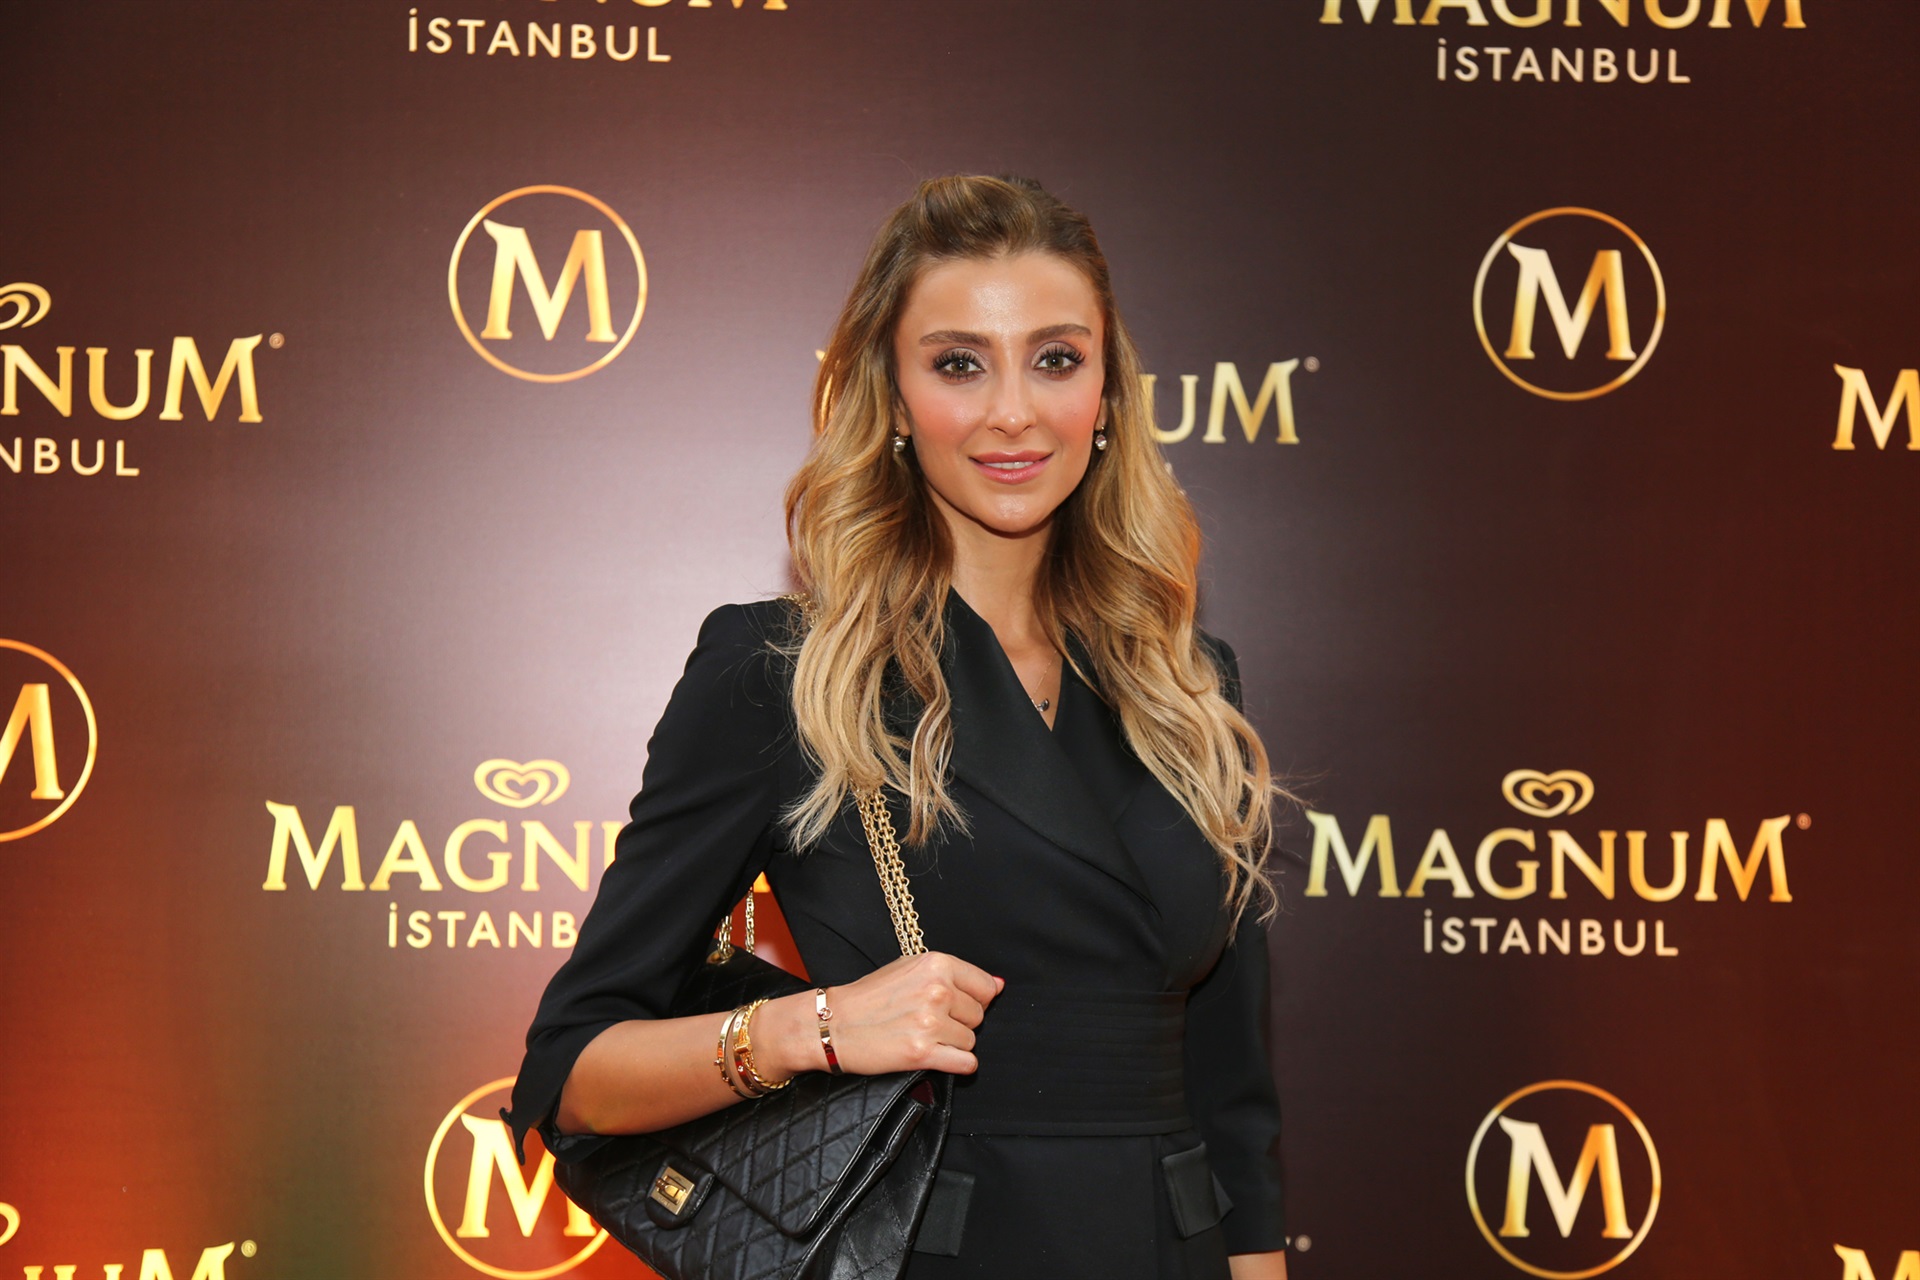 Magnum Store İstanbul Açılışı